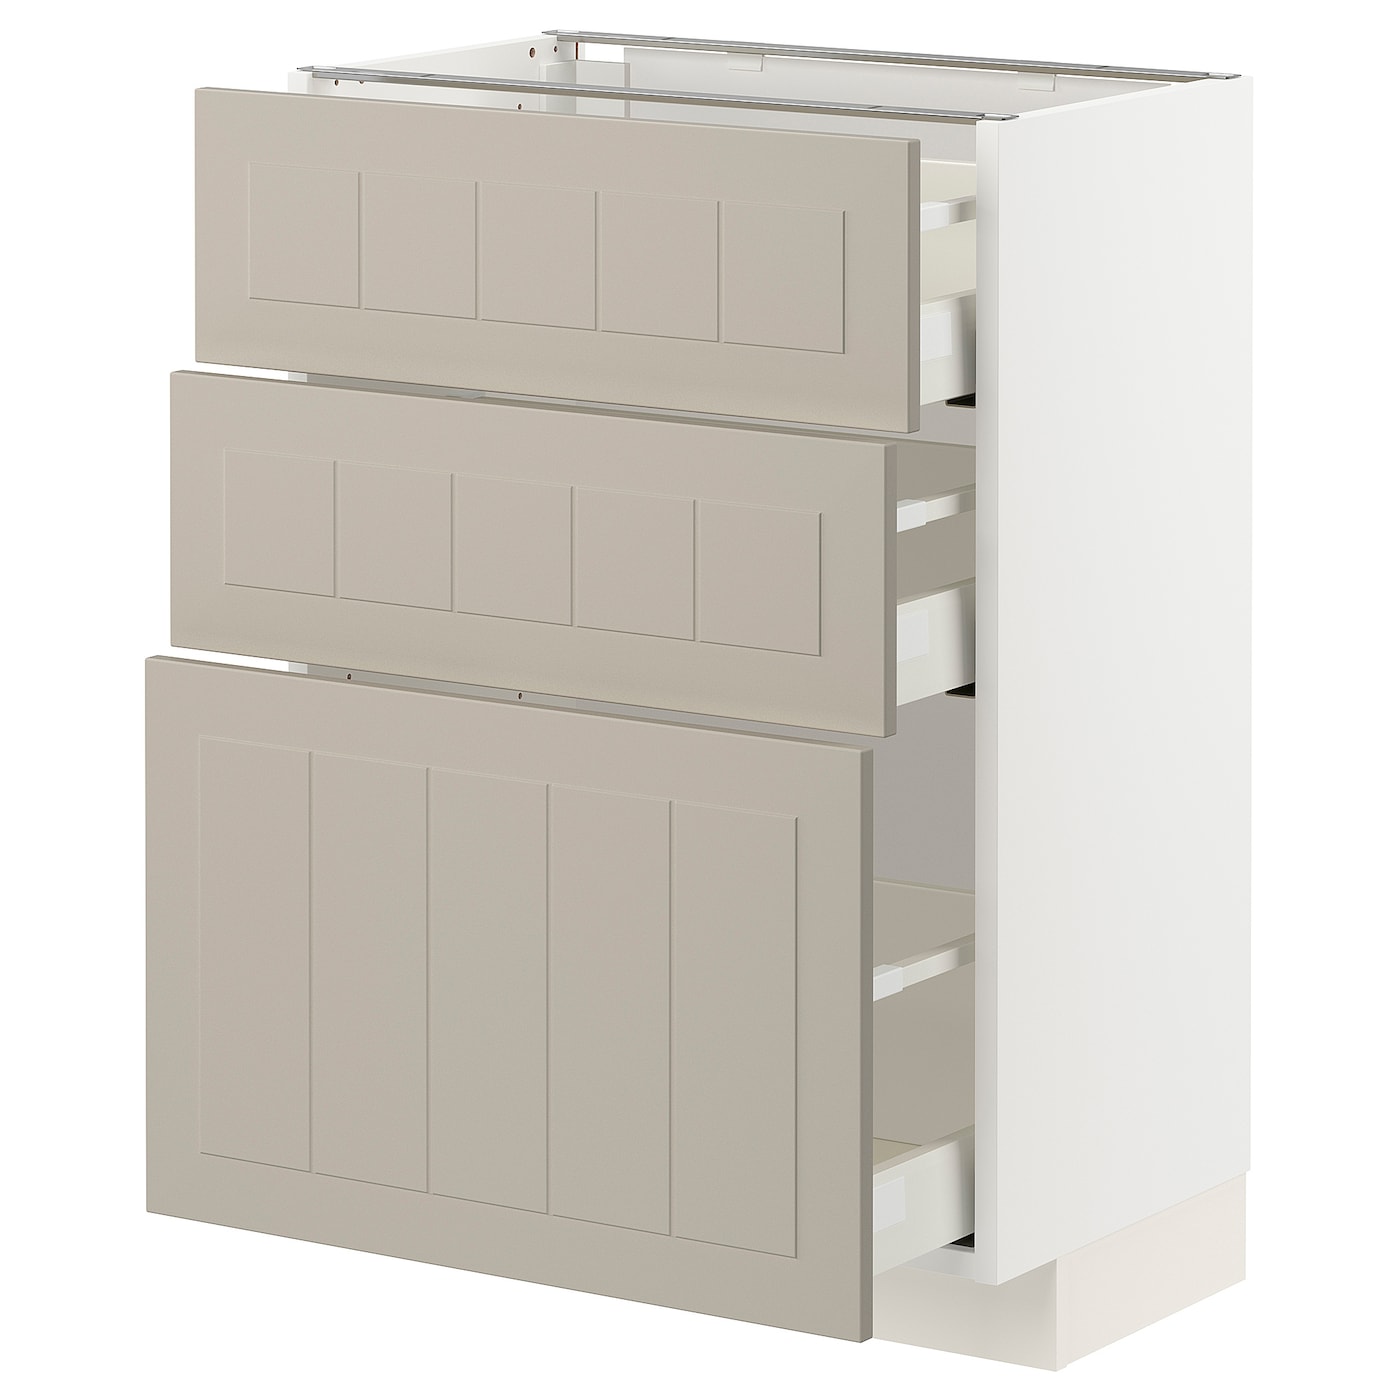 Напольный шкаф - METOD / MAXIMERA IKEA/ МЕТОД/ МАКСИМЕРА ИКЕА,  88х60 см, белый/бежевый